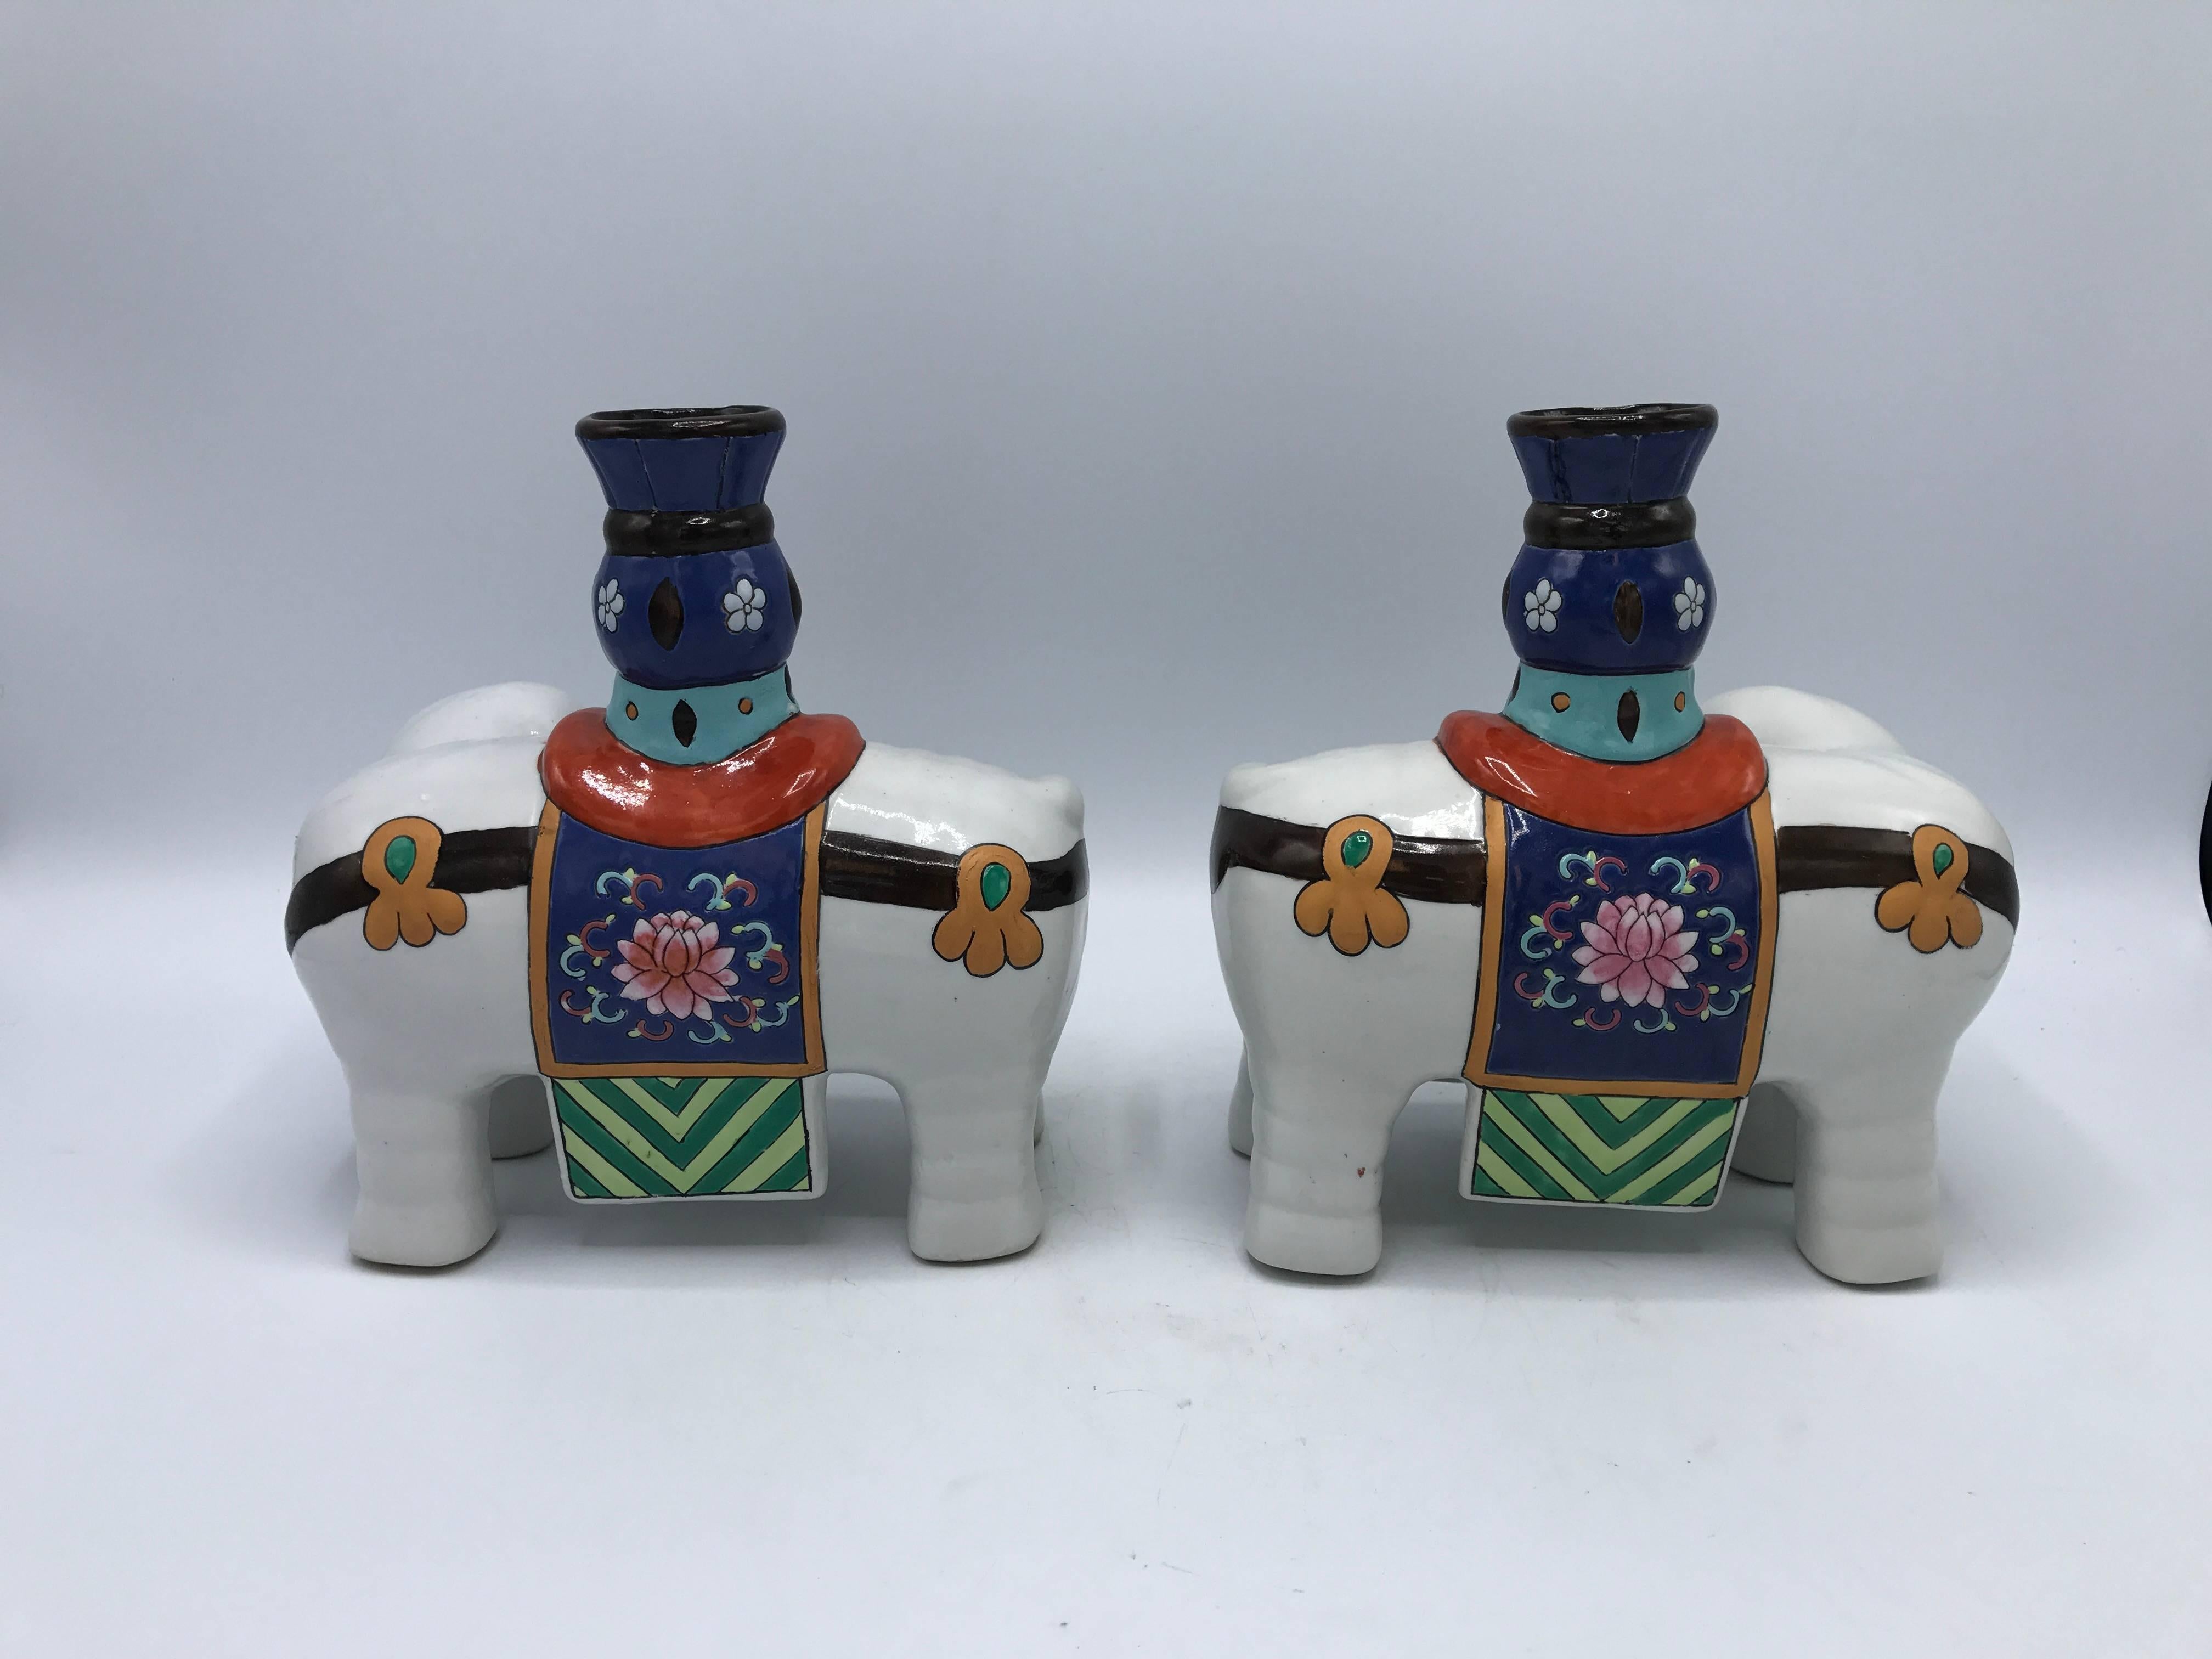 20th Century 1960s Polychrome Ceramic Elephant Sculpture Candlestick Holders, Pair